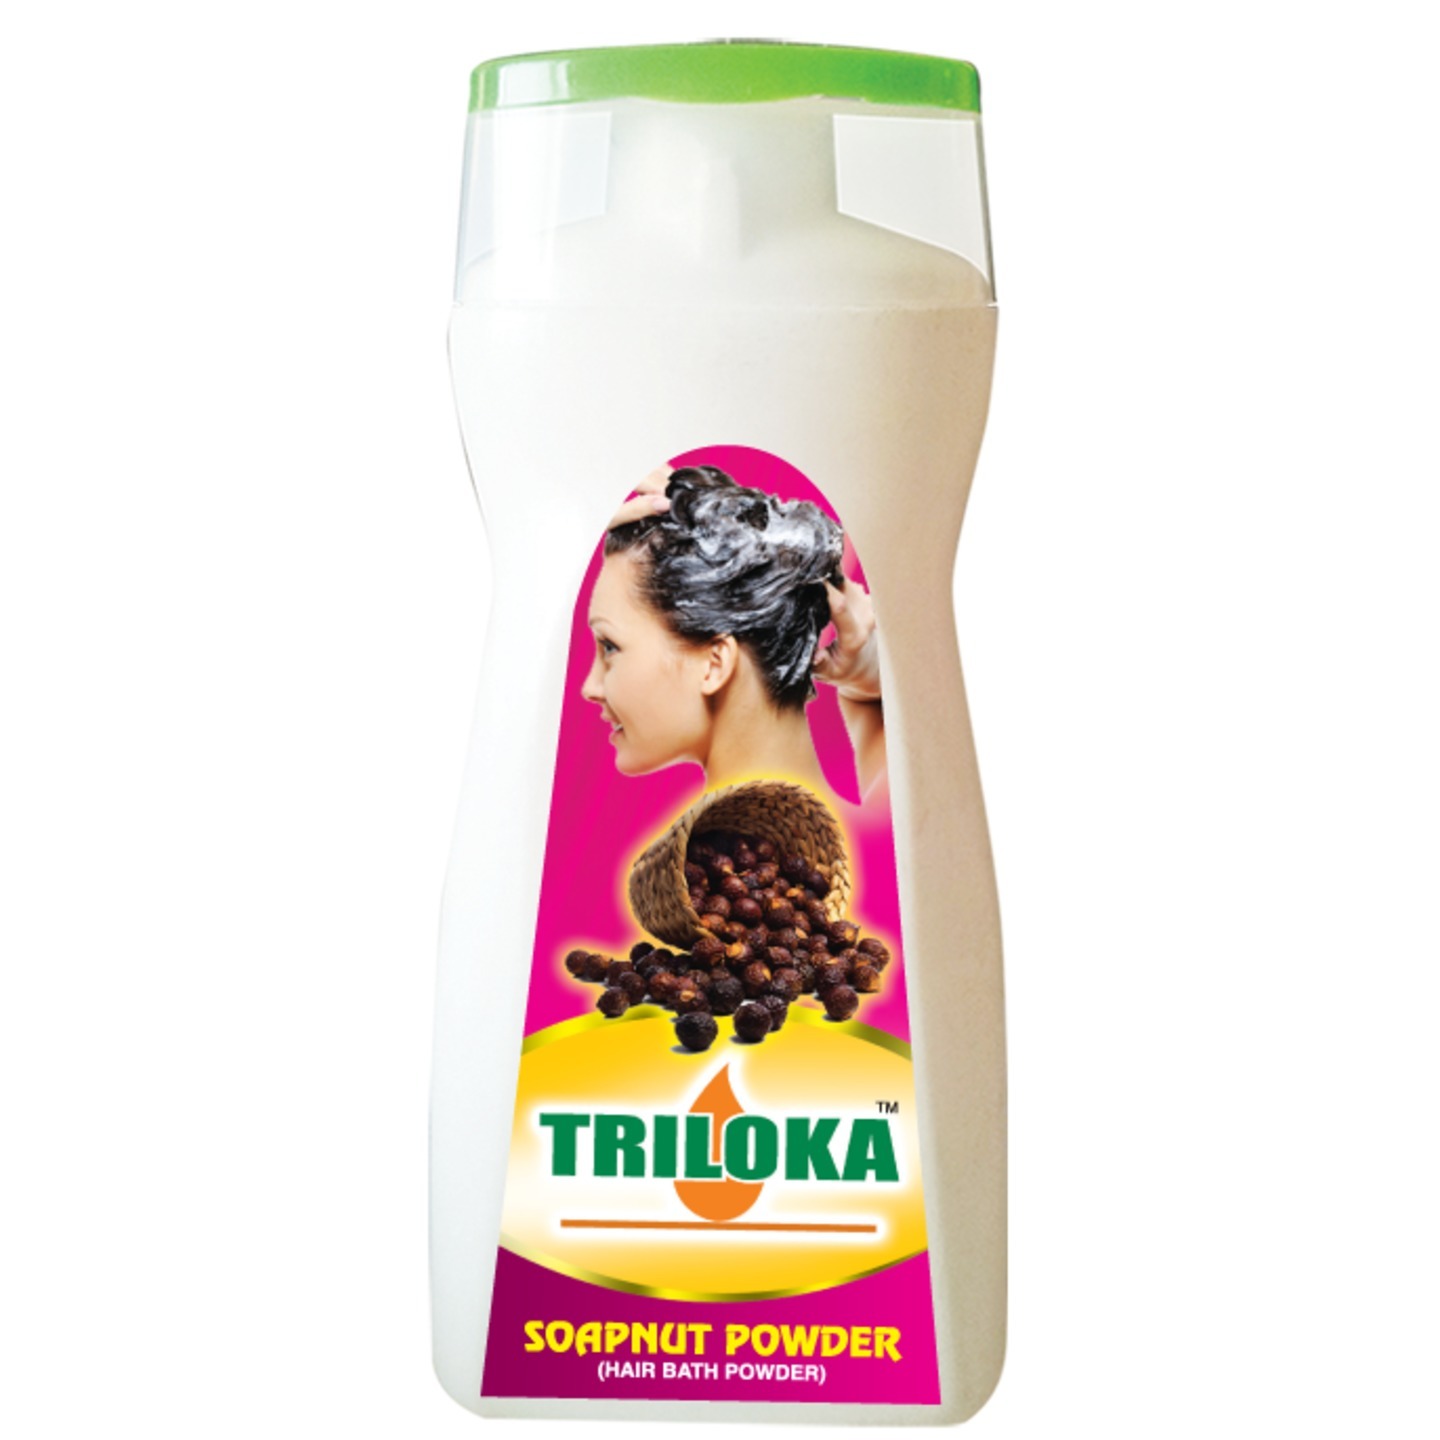 New Triloka Soapnut Head Bathing Powder Bottle ( Shampoo Powder) - 1 Case